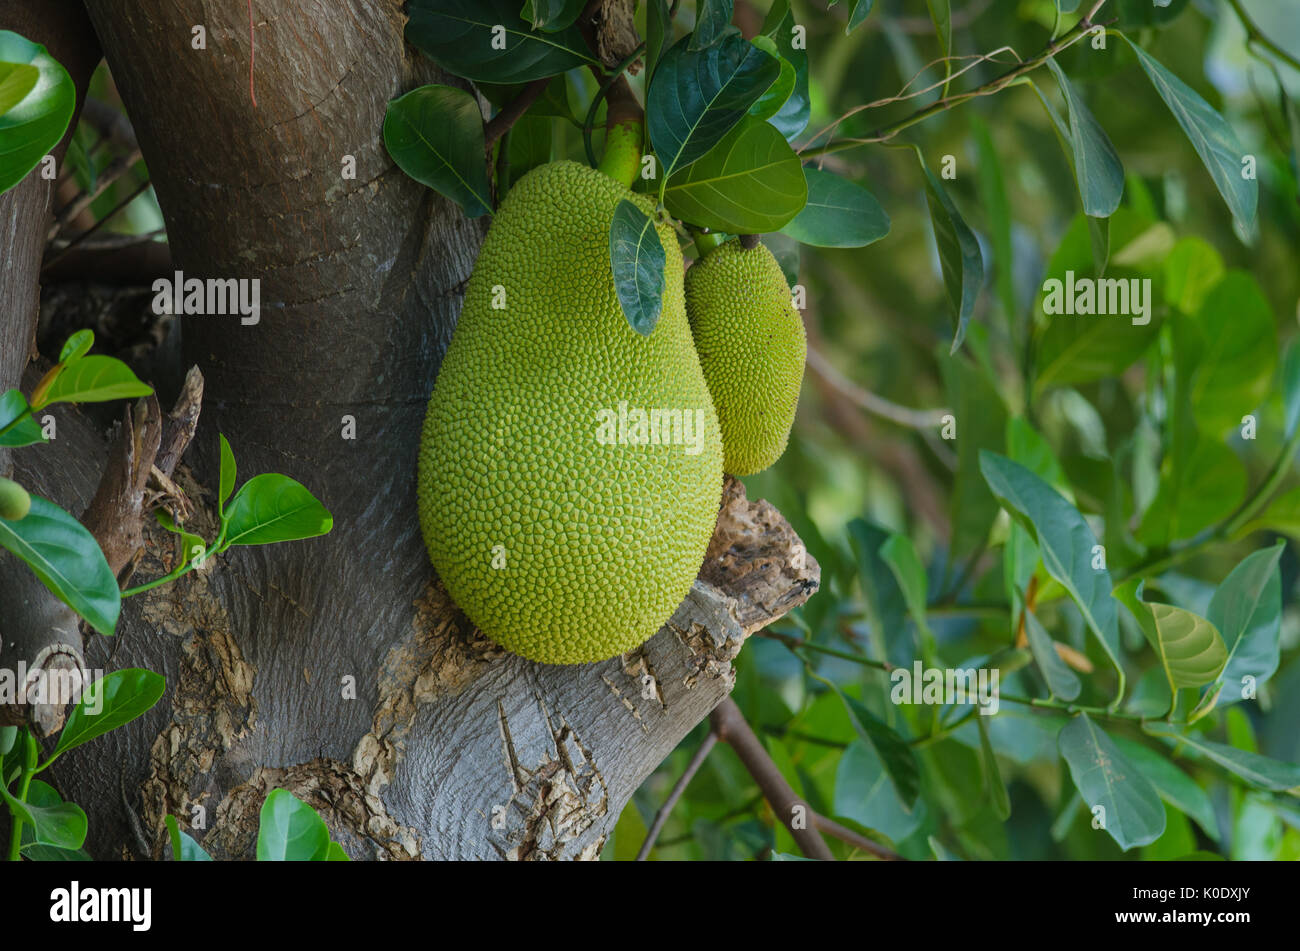 jackfruit (alternately jack tree, jakfruit, or sometimes simply jack or jak; scientific name Artocarpus heterophyllus) on a tree Stock Photo